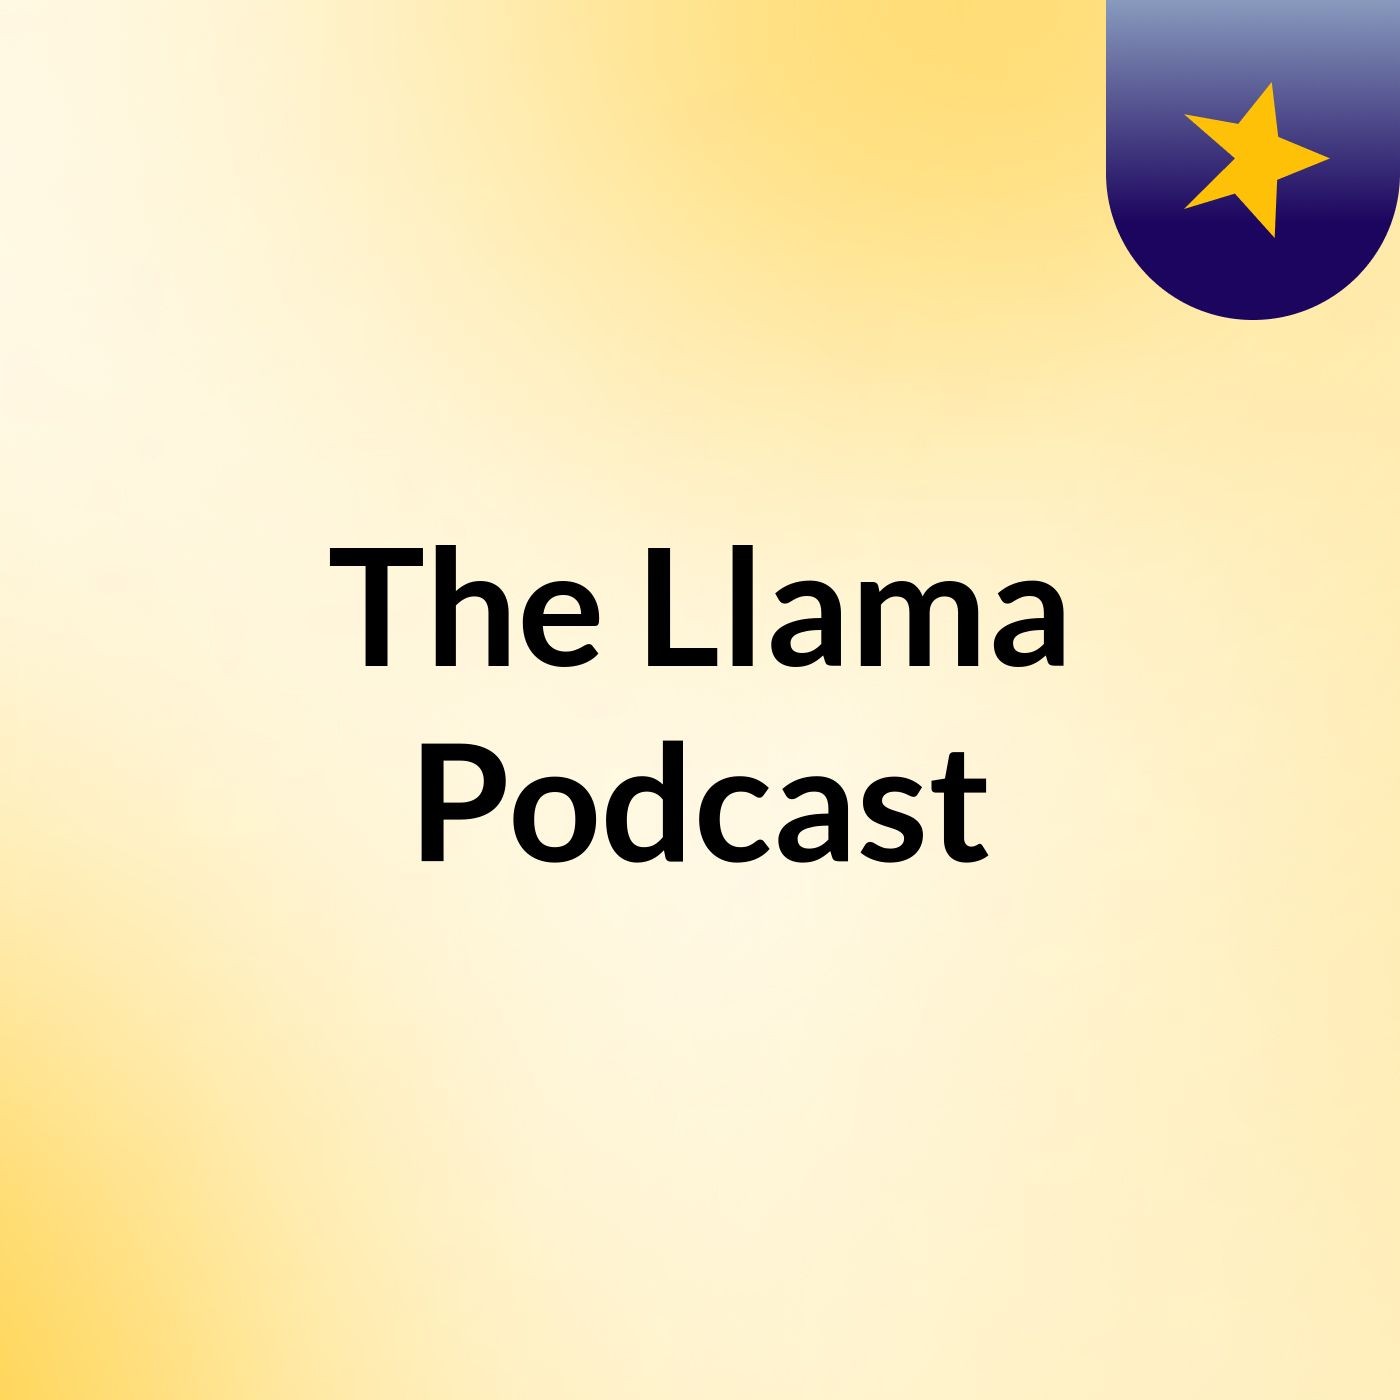 The Llama Podcast